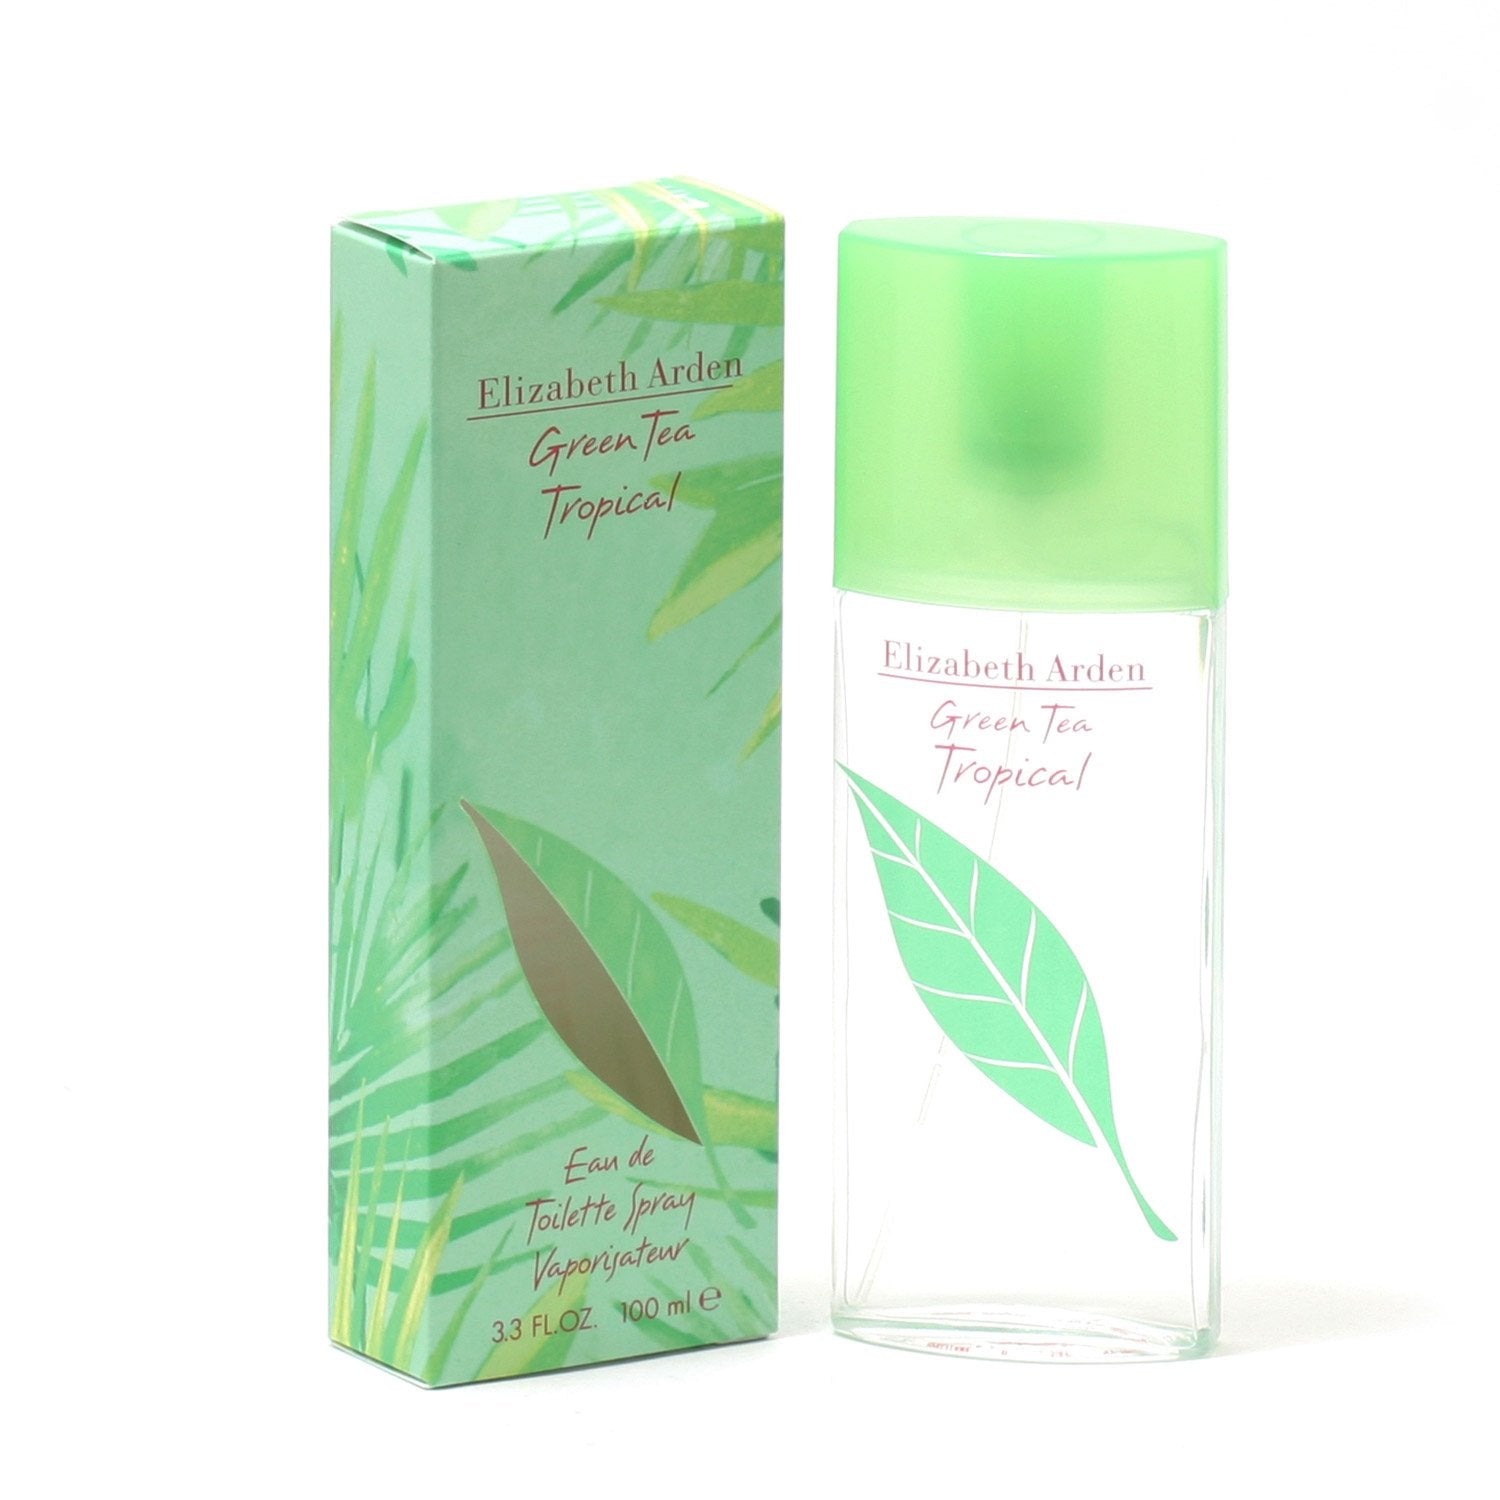 Perfume - GREEN TEA TROPICAL FOR WOMEN BY ELIZABETH ARDEN - EAU DE TOILETTE SPRAY, 3.3 OZ